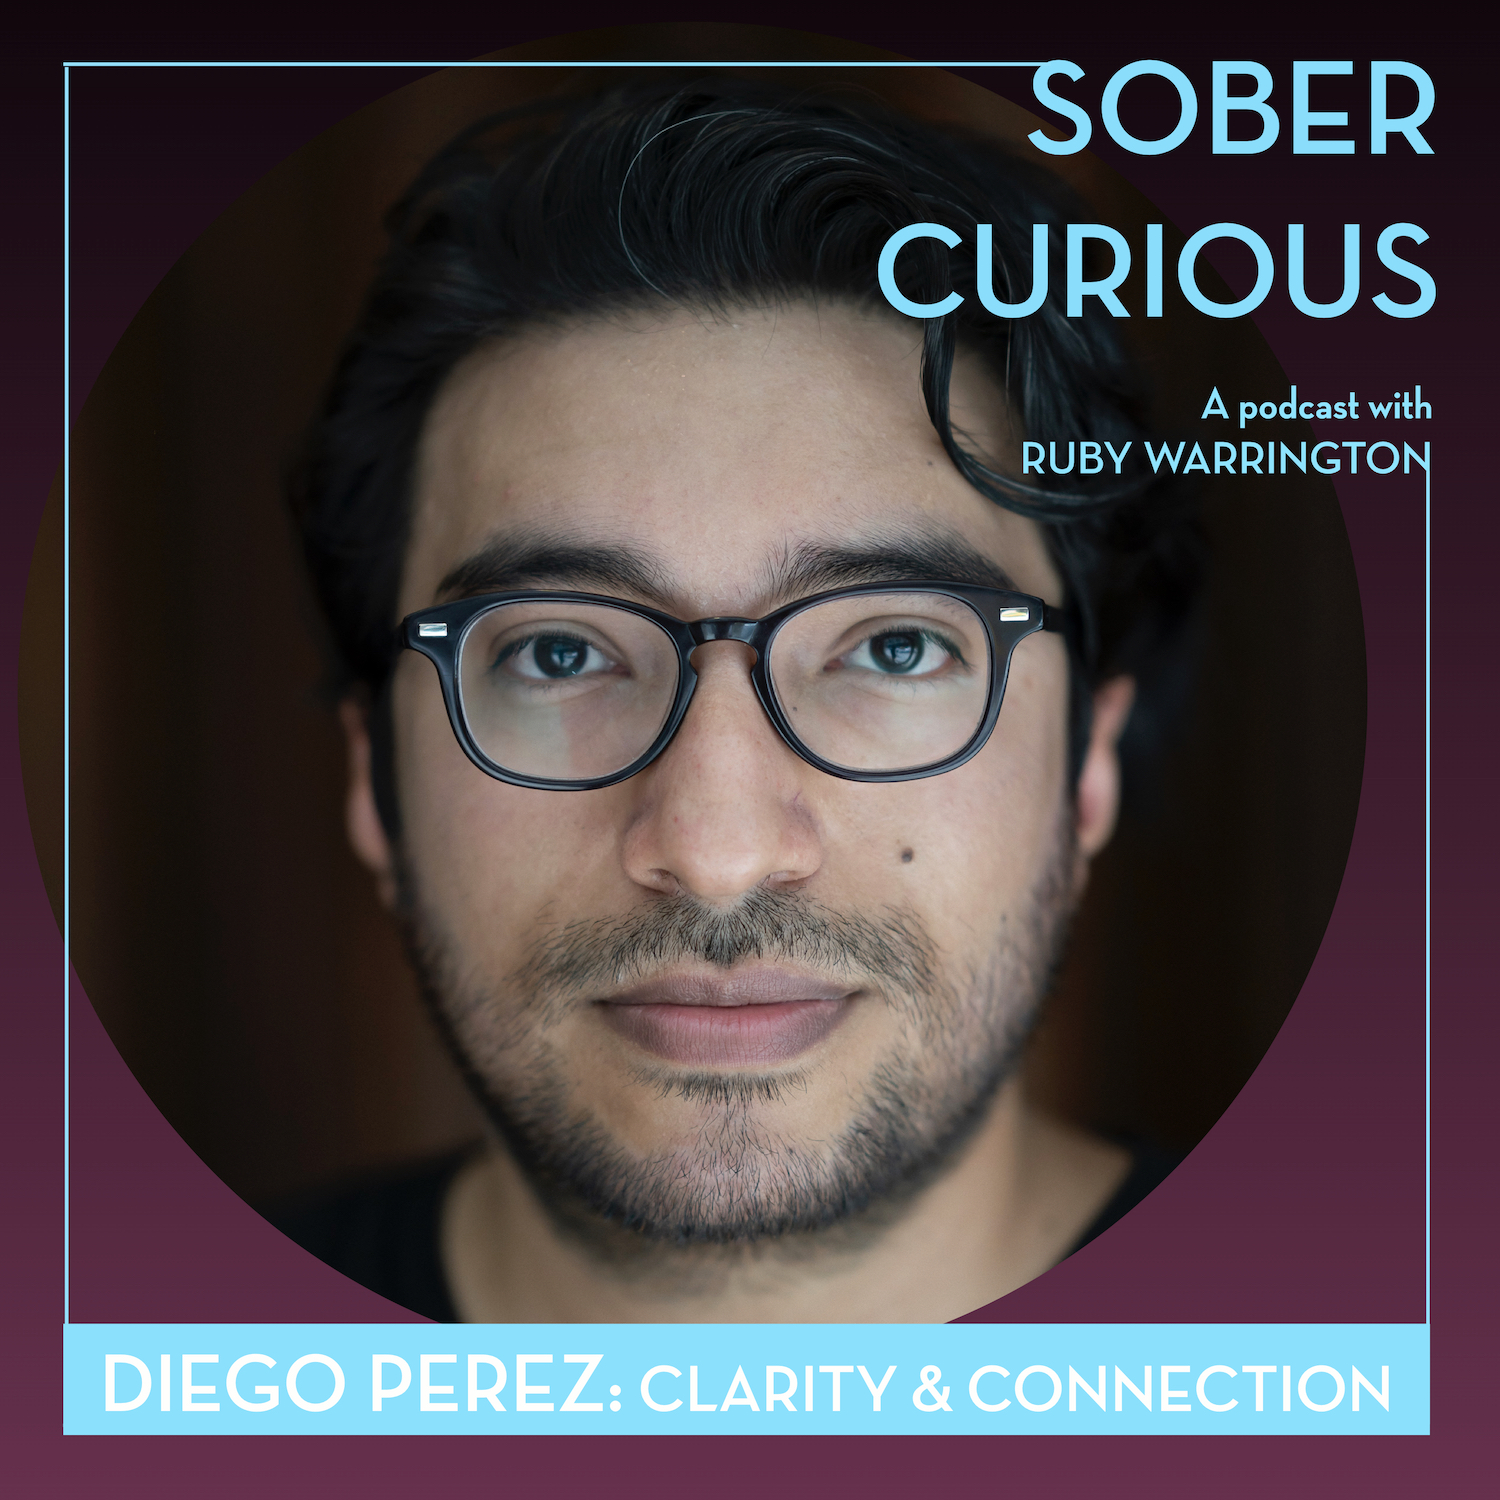 Diego Perez Sober Curious podcast ruby warrington yung pueblo